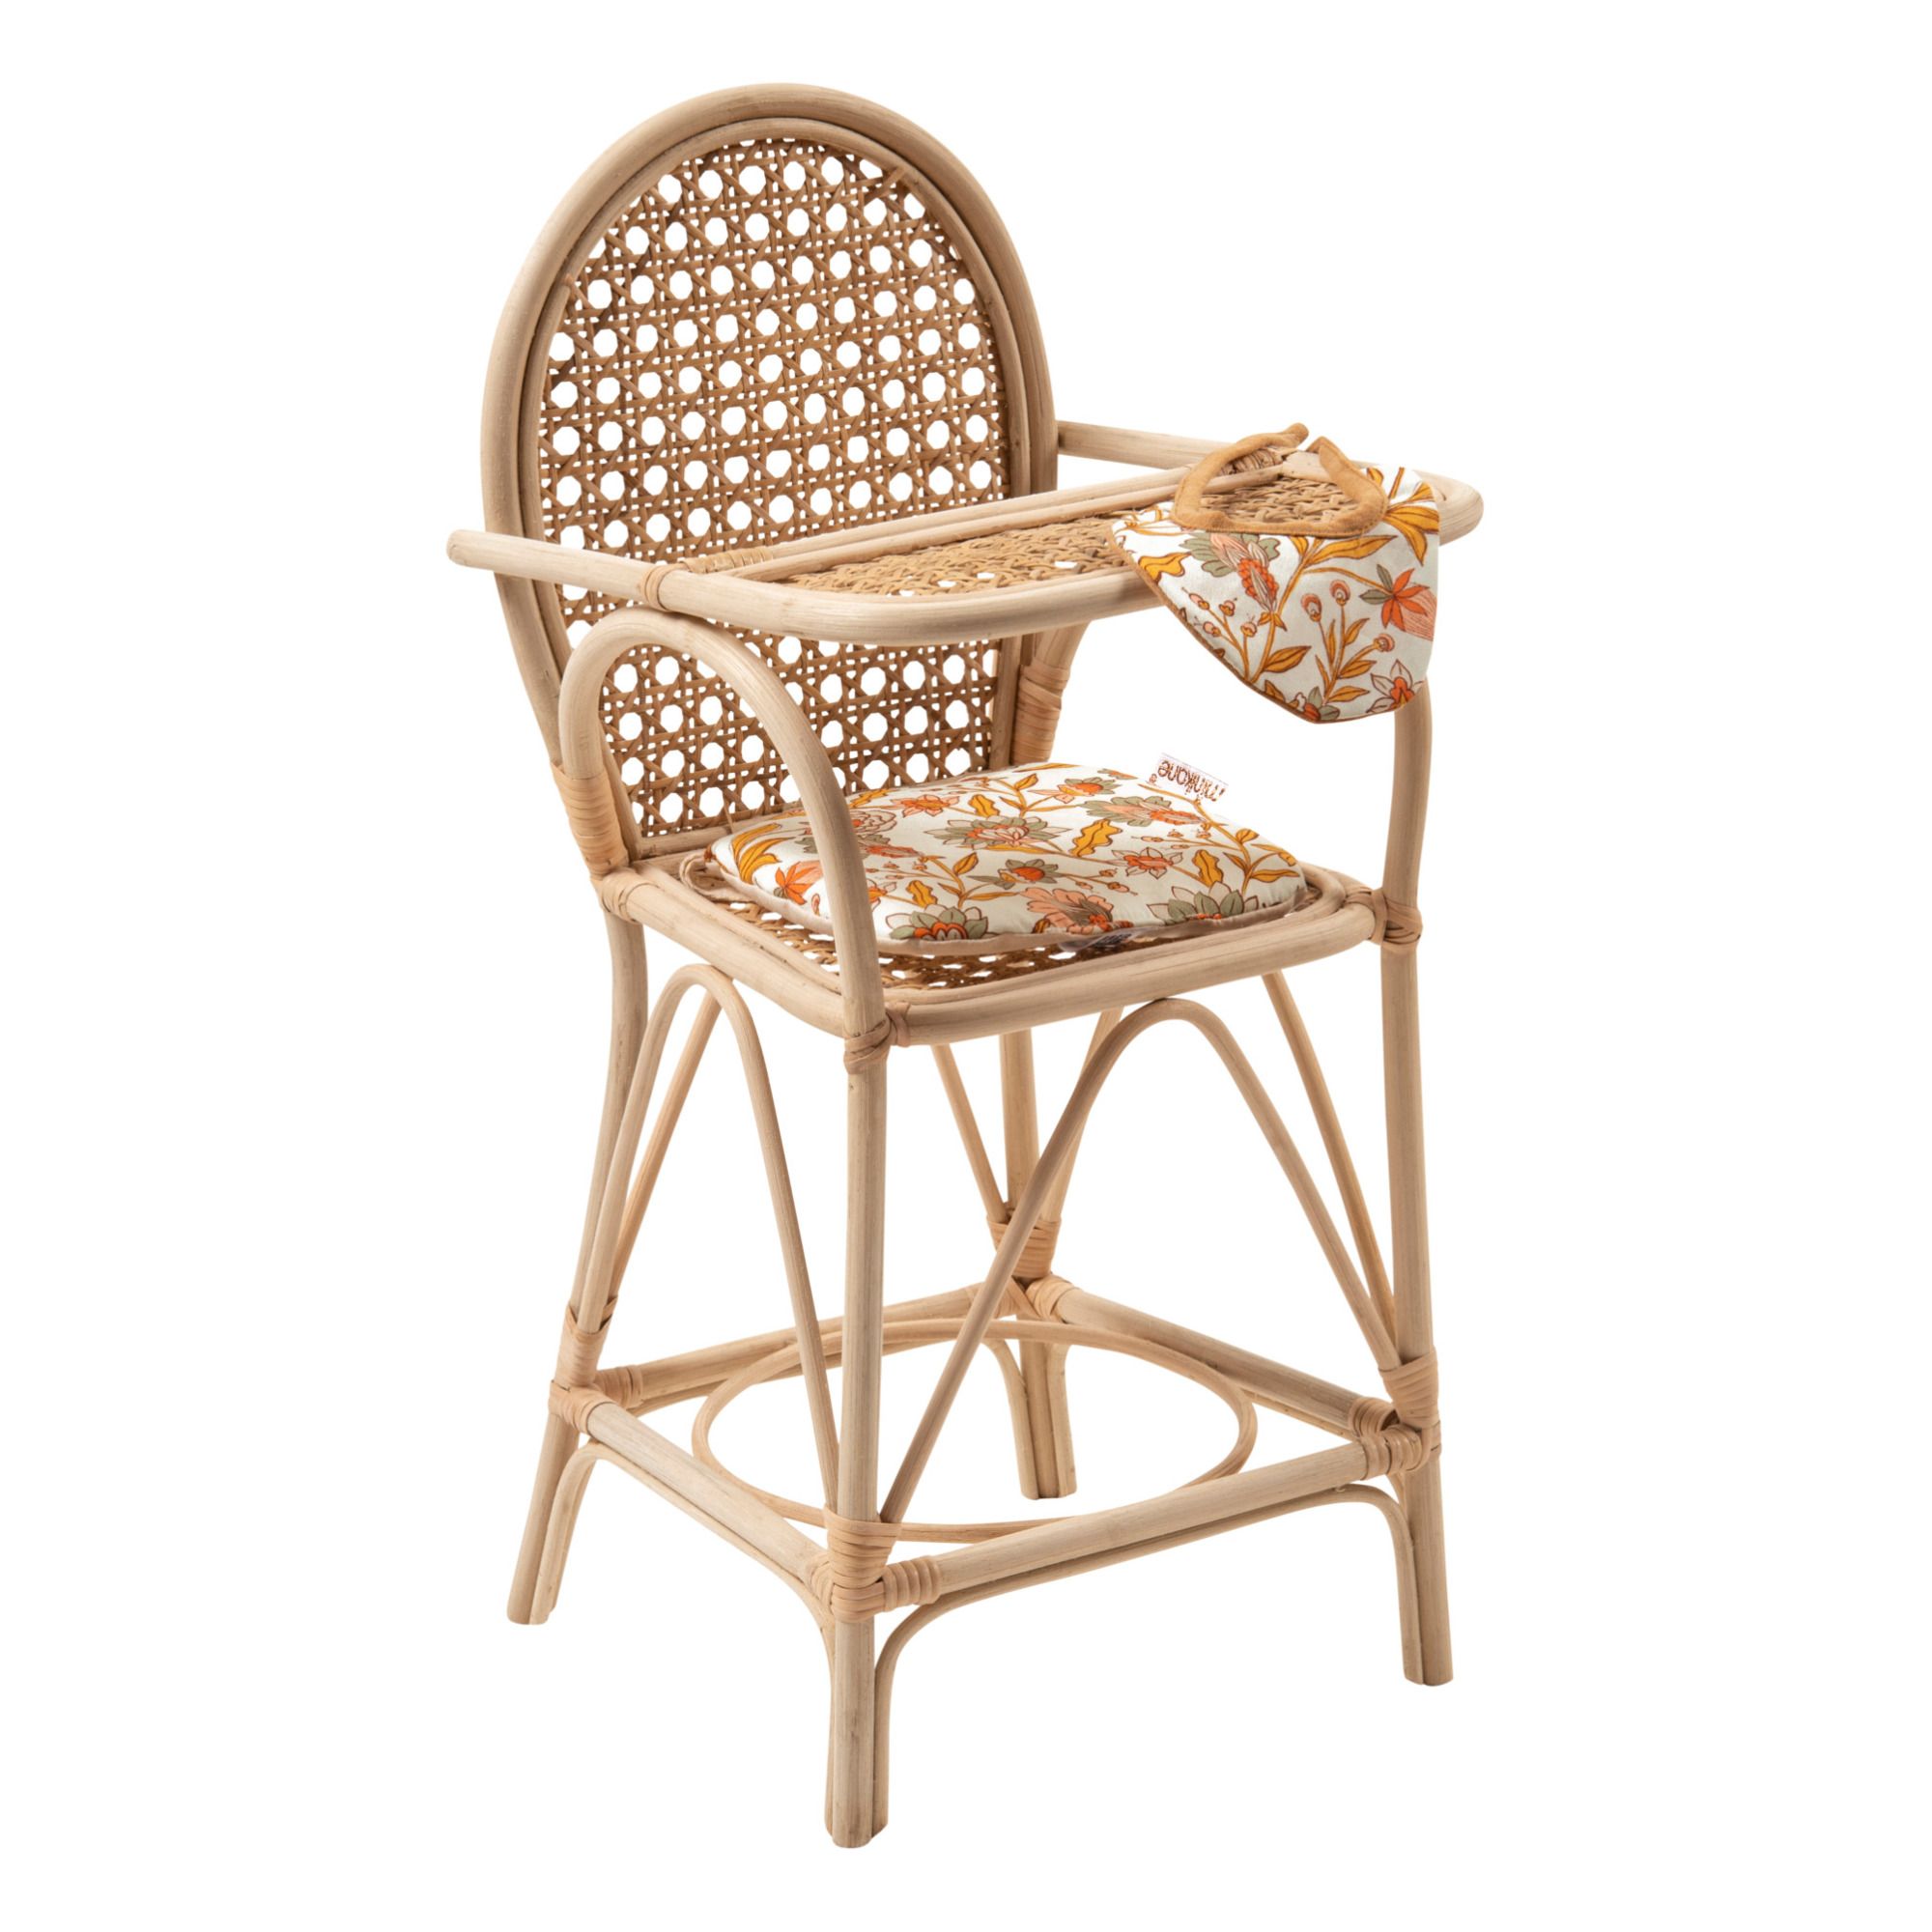 Minikane - Chaise haute pour poupée en rotin Adèle